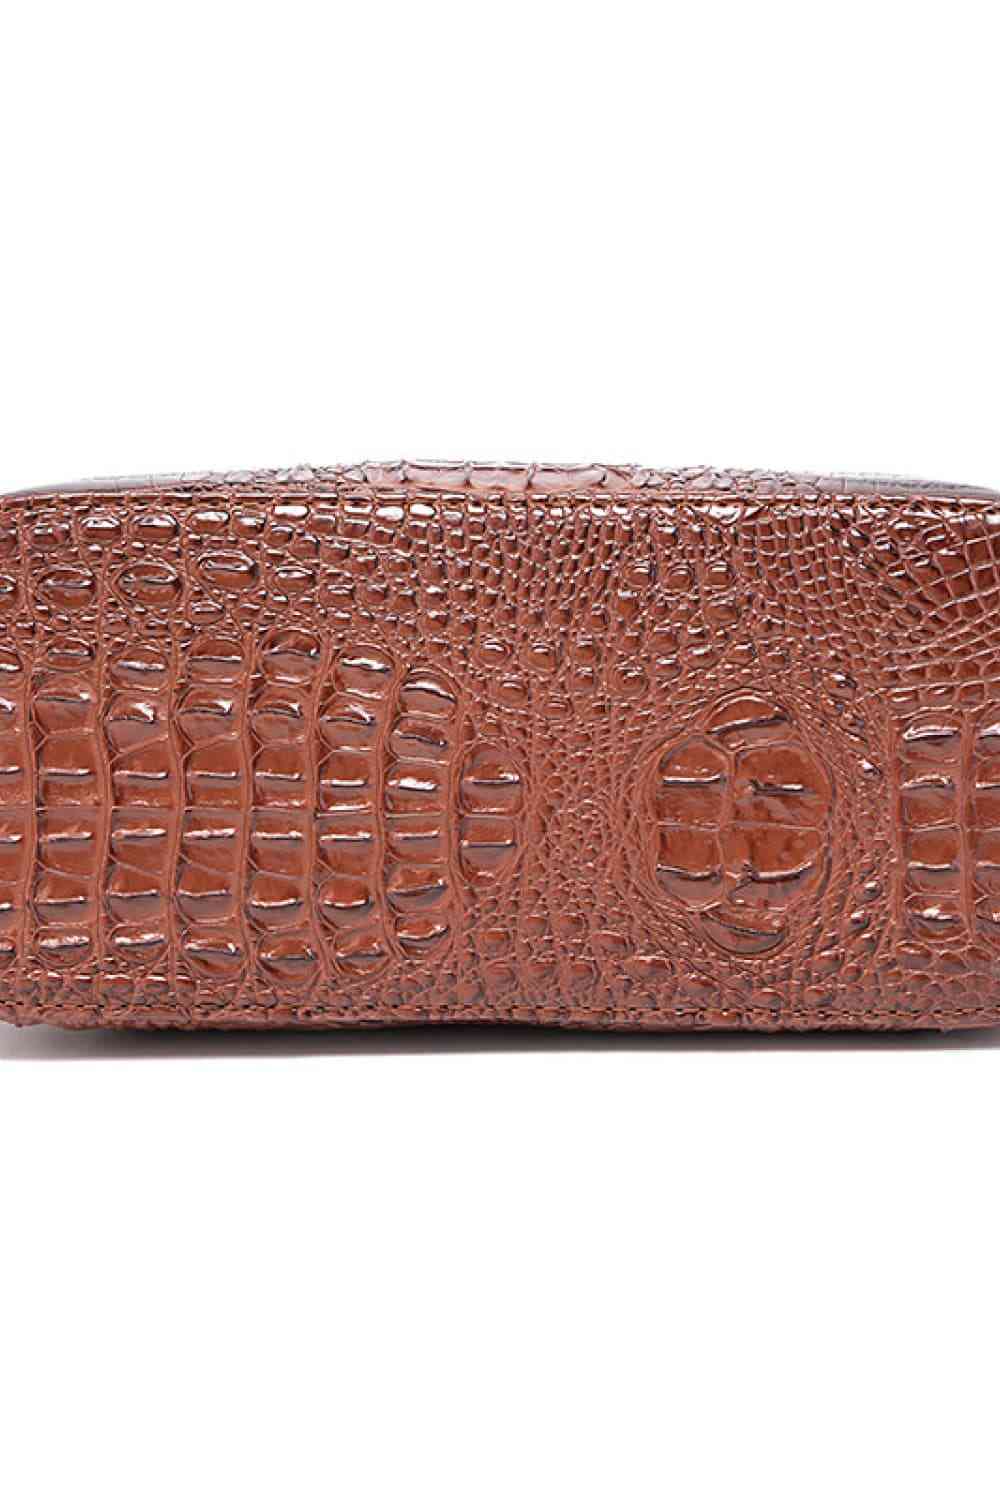 Women's Texture PU Leather Handbag